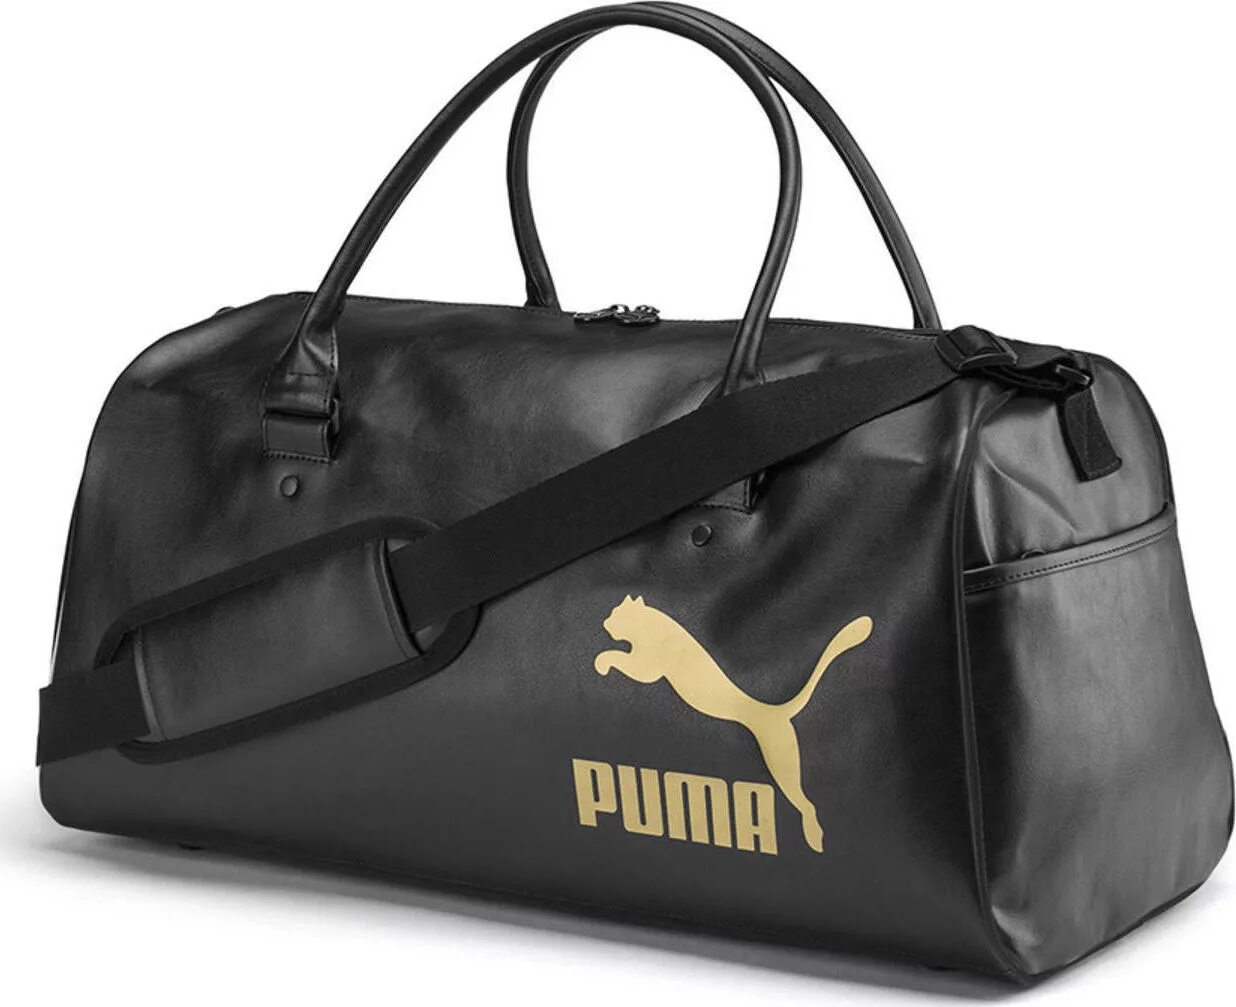 Спортивная сумка Пума женская. Спортивная сумка Пума мужская. Спортивная сумка Puma женская. Пума кожаная спортивная сумка мужская. Мужская сумка пума